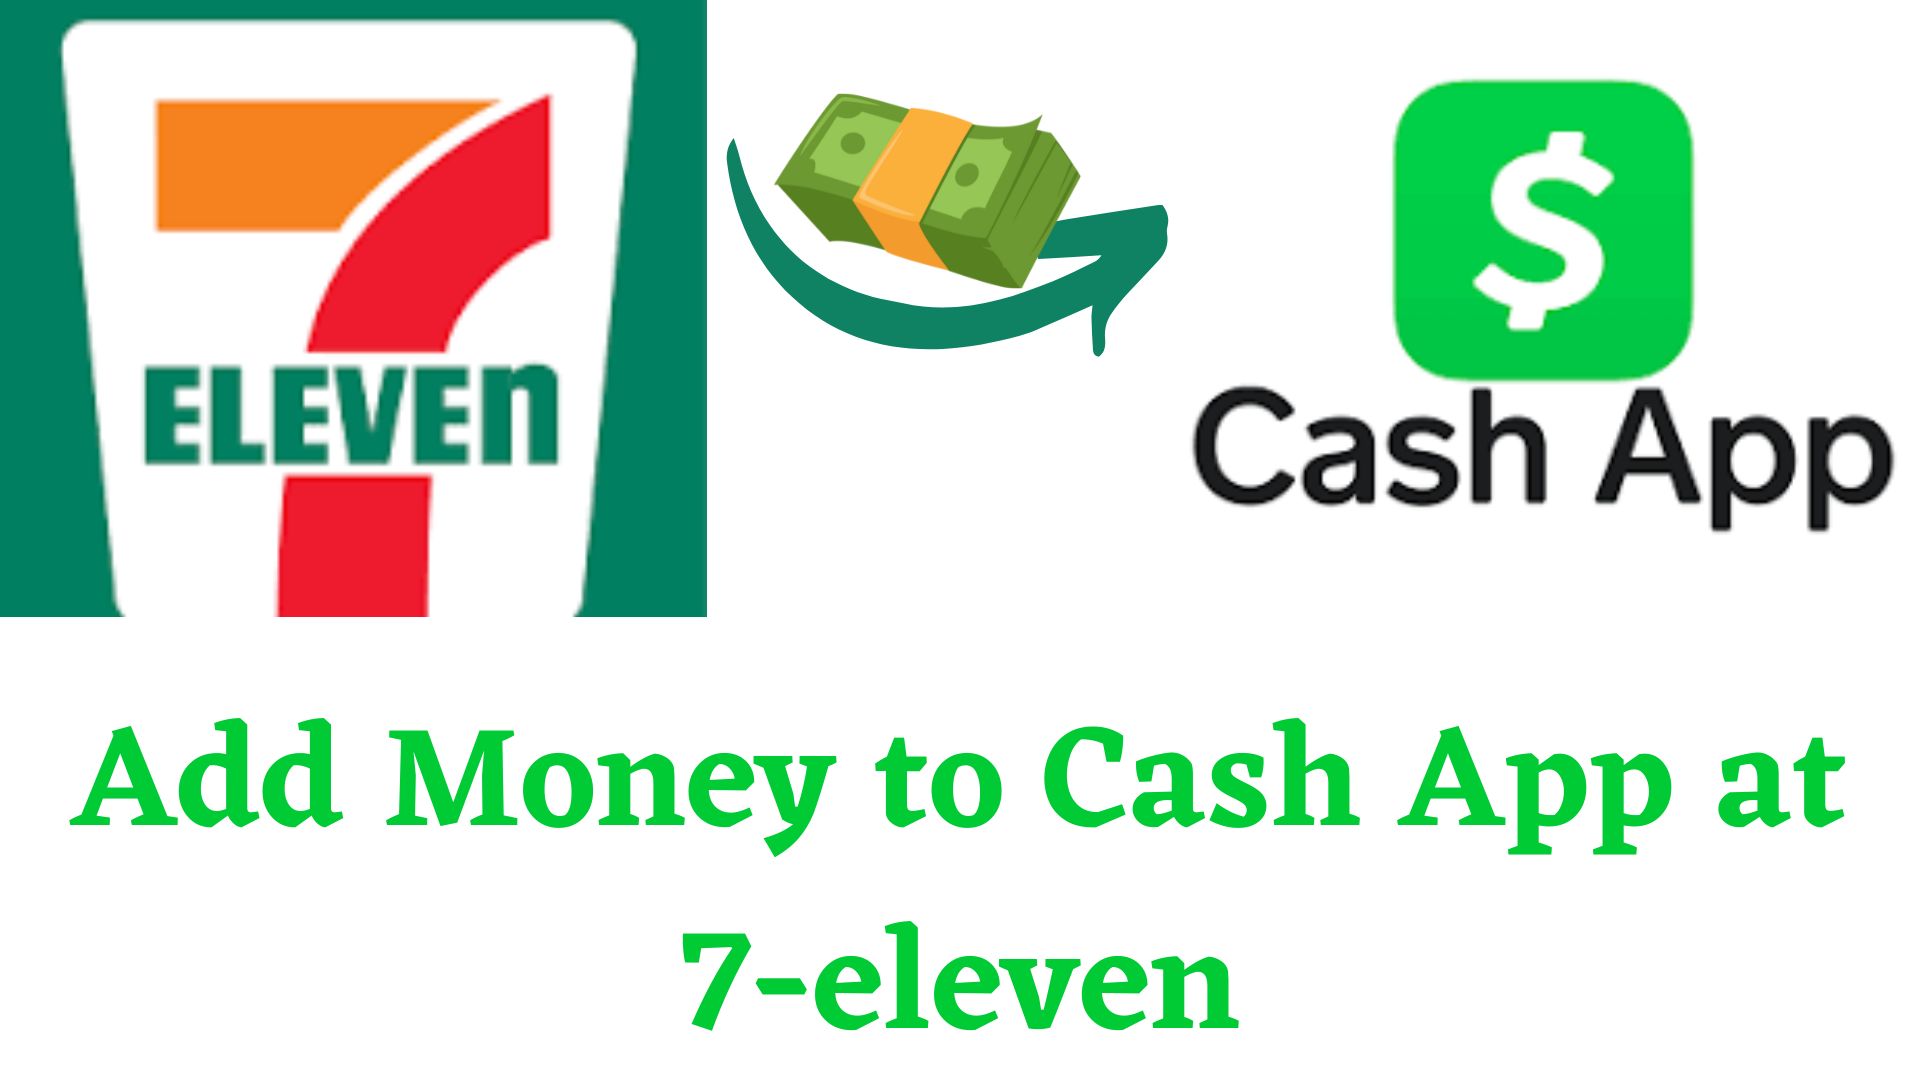 Add Money to Cash App at 7-eleven